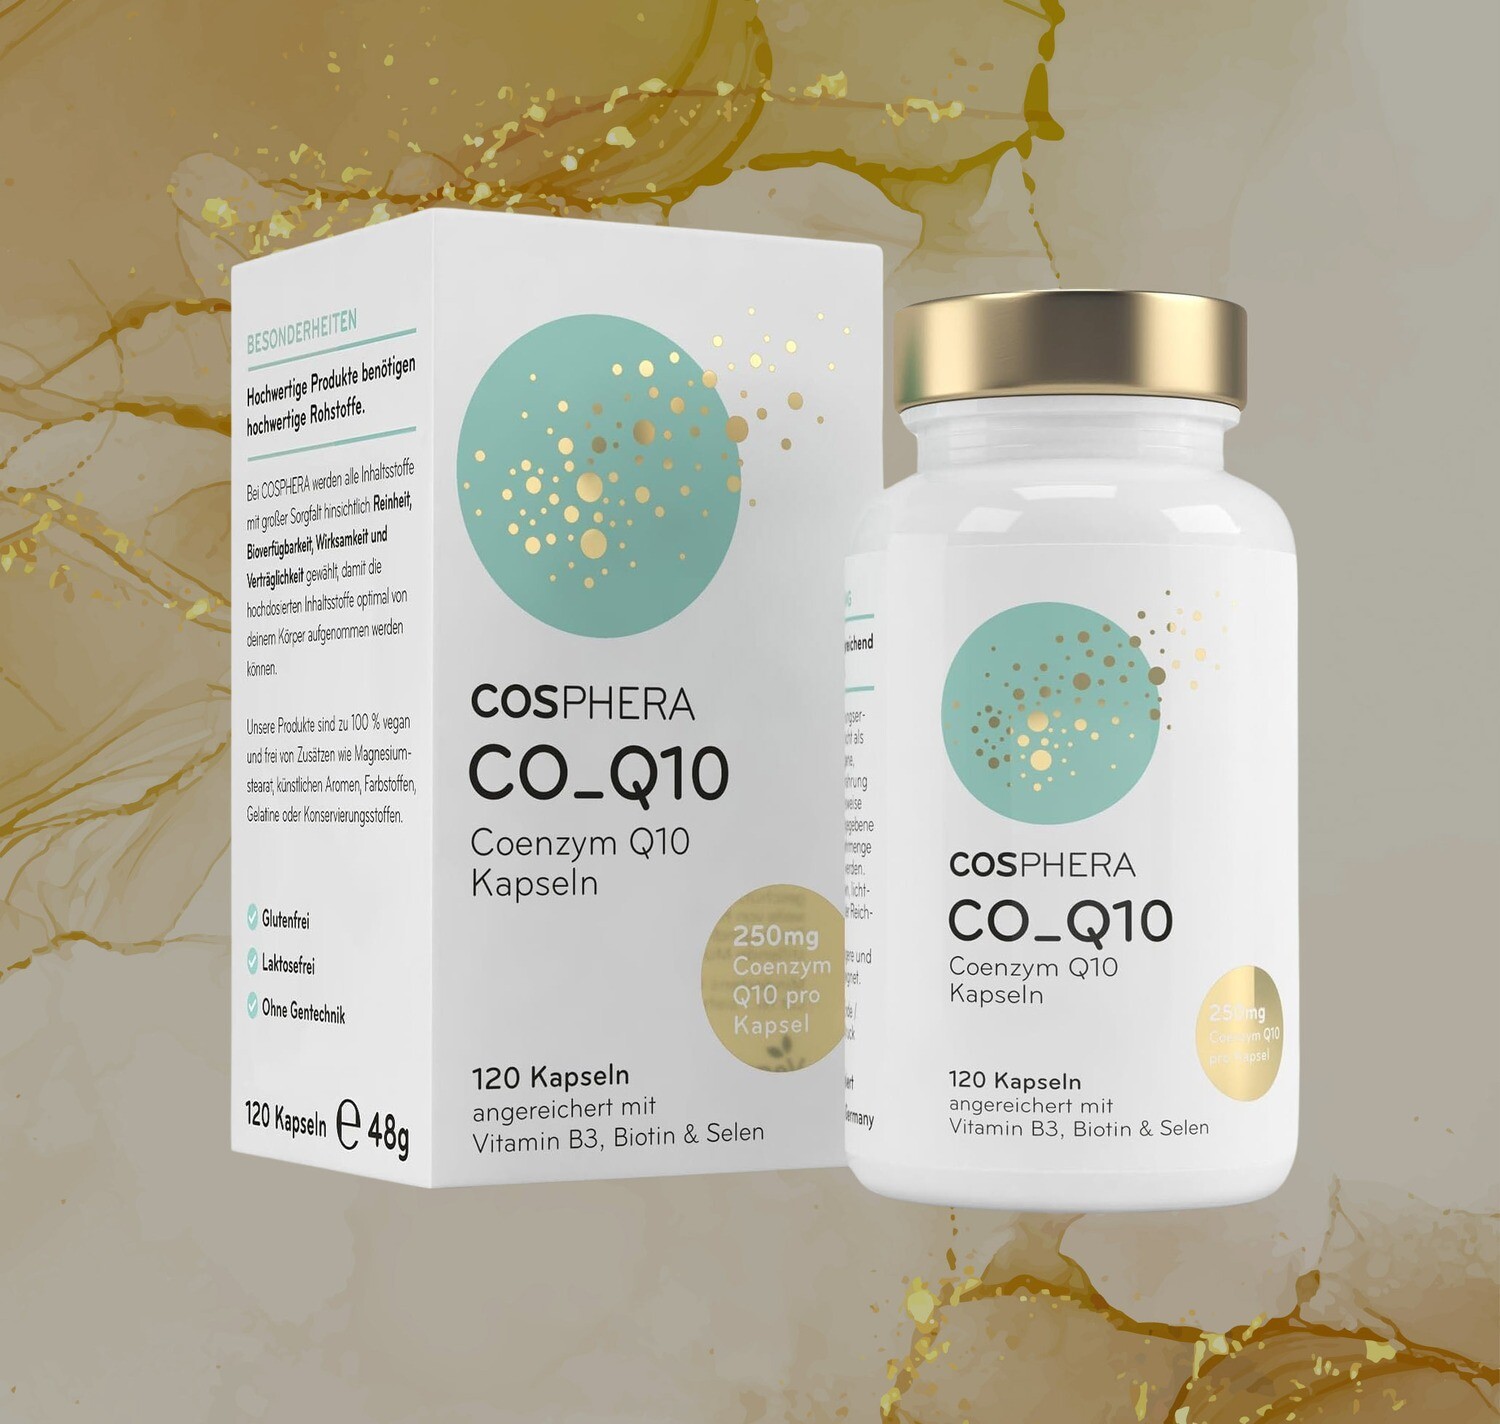 COSPHERA Co_Q10 120 Kapseln mit Vitamin B3, Biotin & Selen